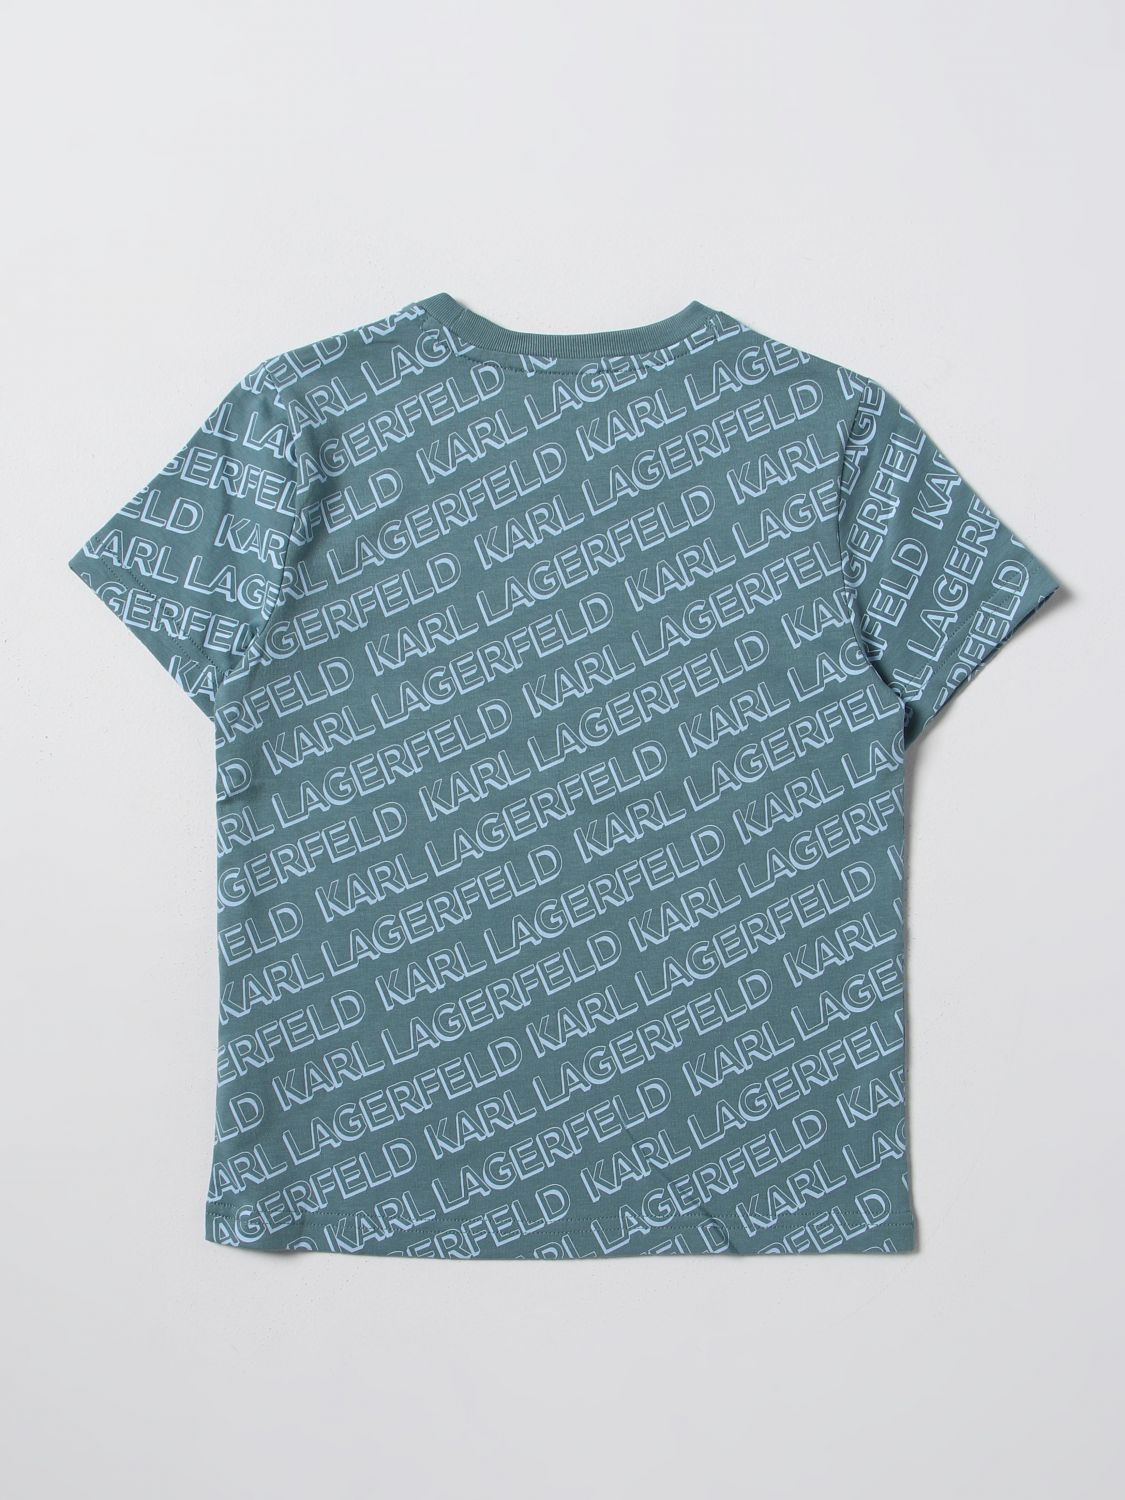 KARL LAGERFELD KIDS: t-shirt for boys | Lagerfeld Kids t-shirt Z25395 online on GIGLIO.COM